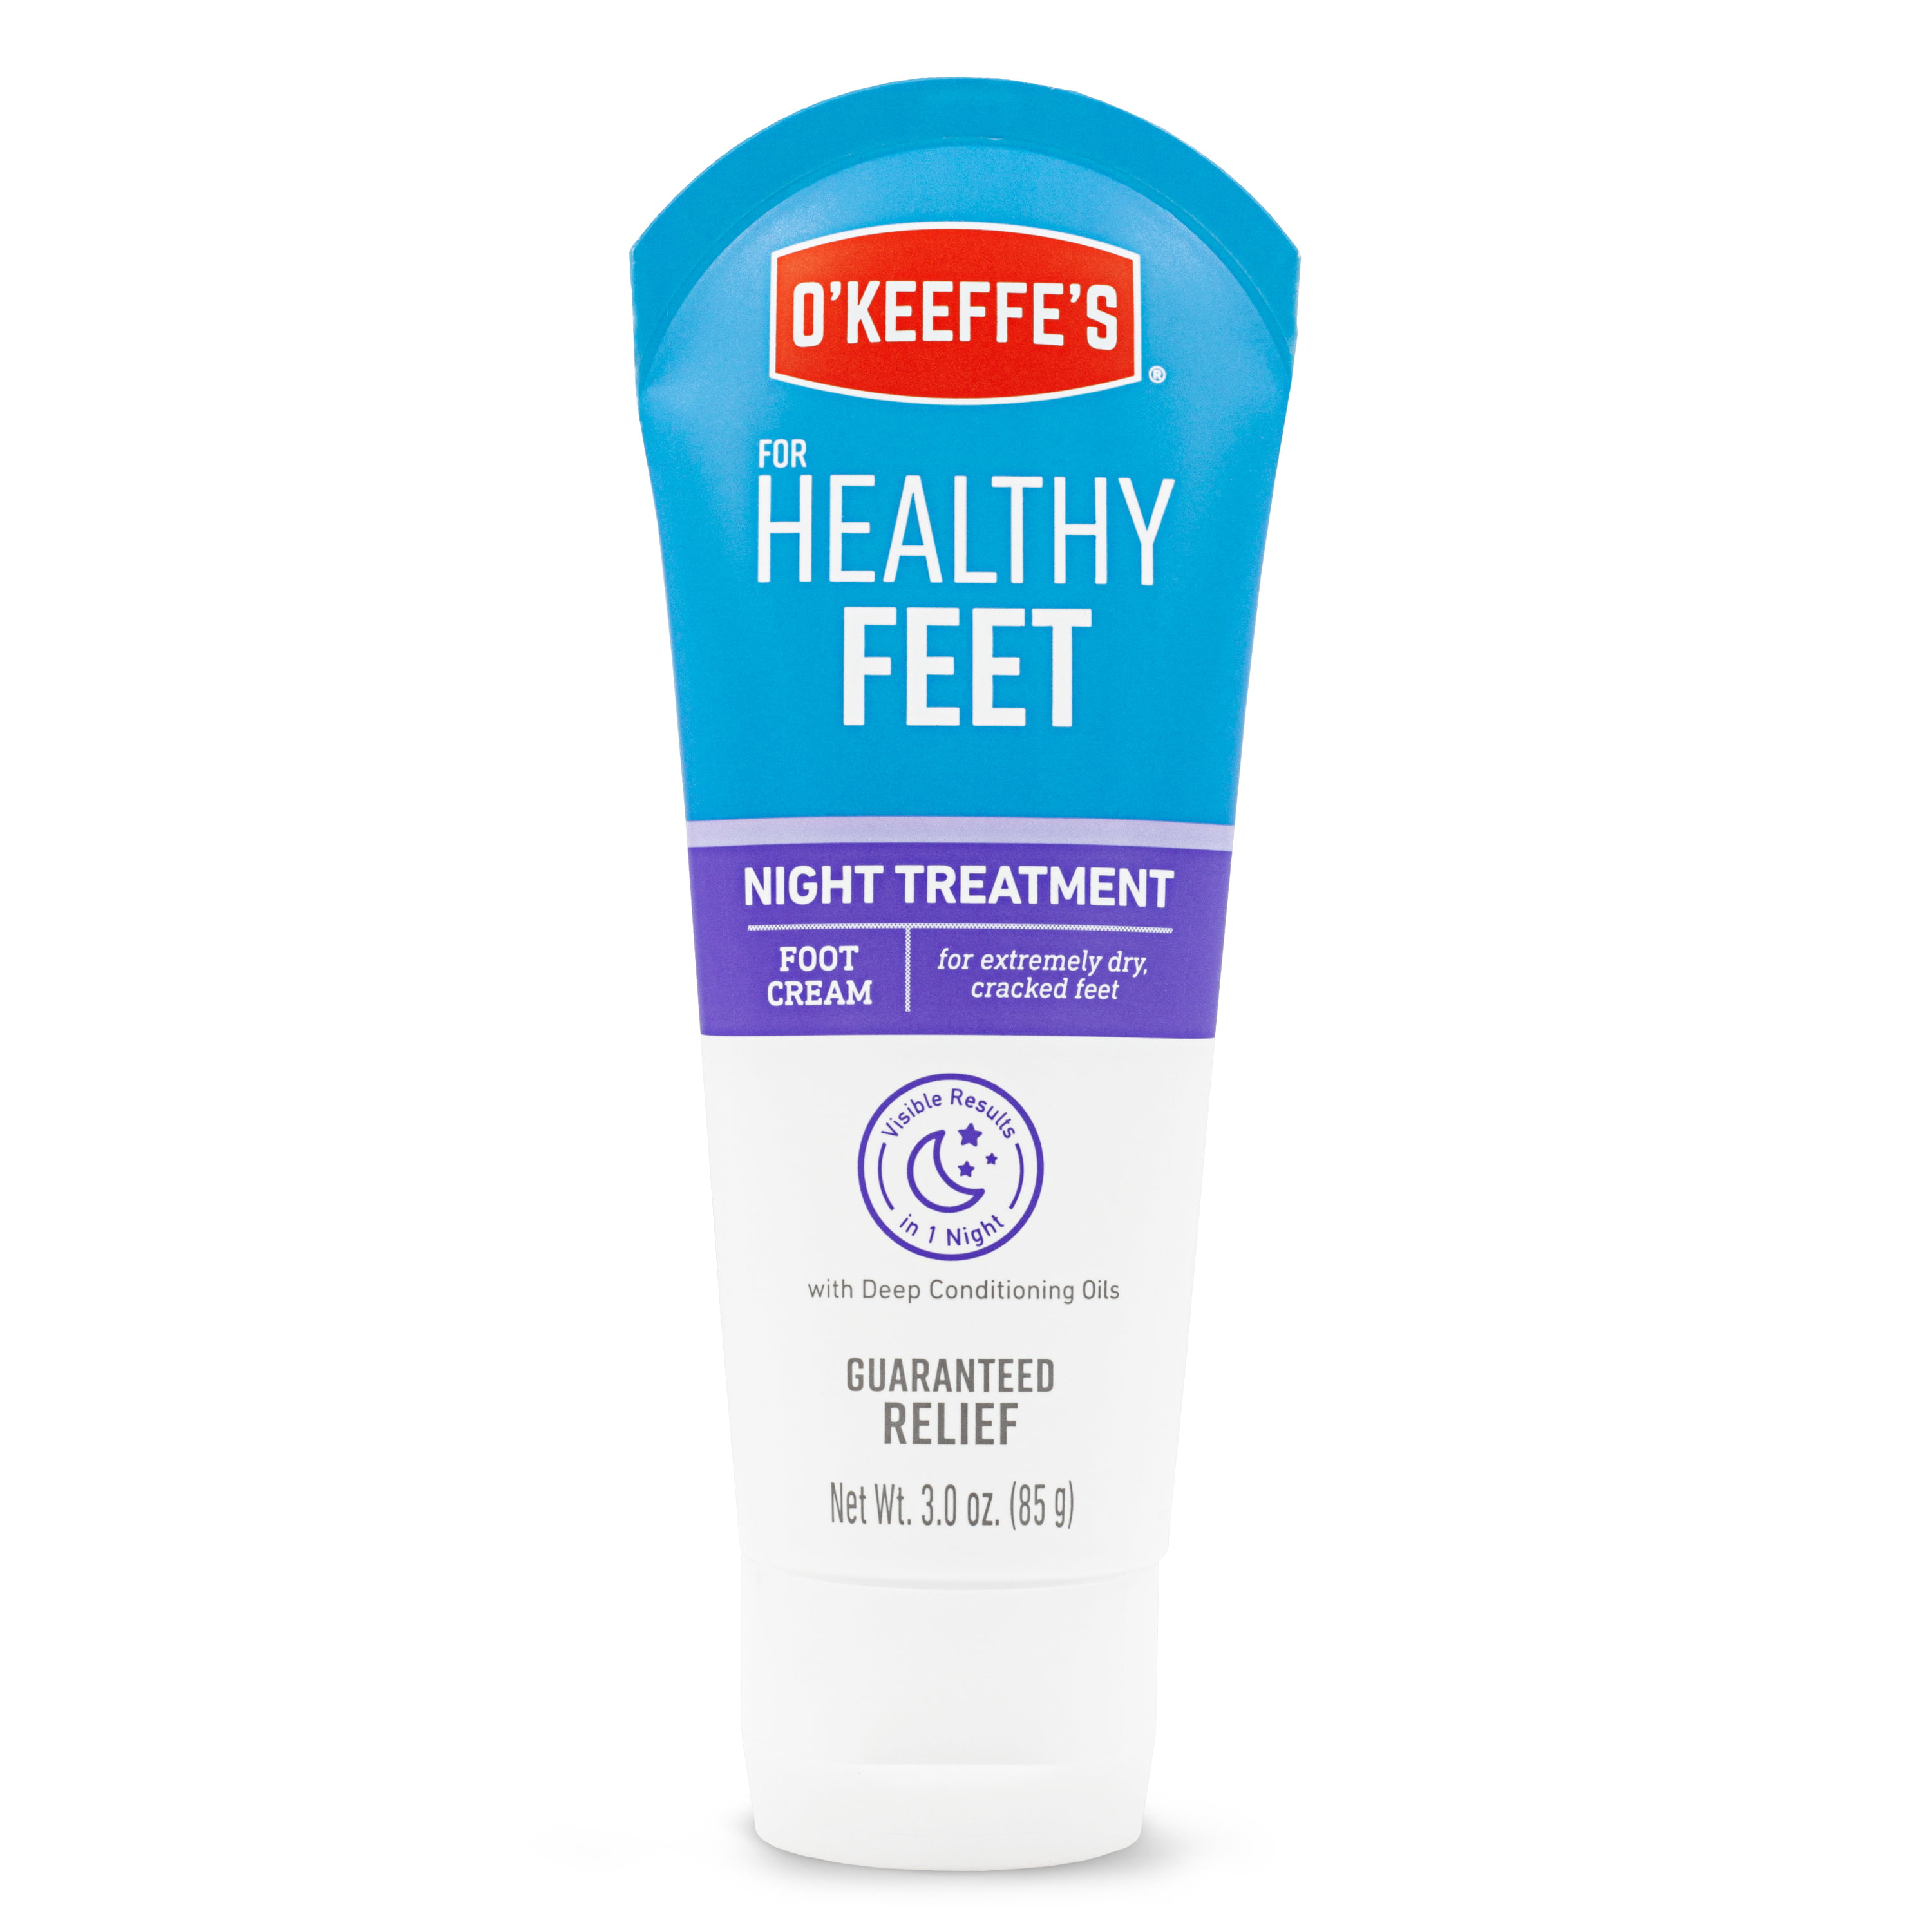 Foot night. O'Keeffe's healthy feet крем. Healthy feet крем. Foot treatment Cream крем д/ног.